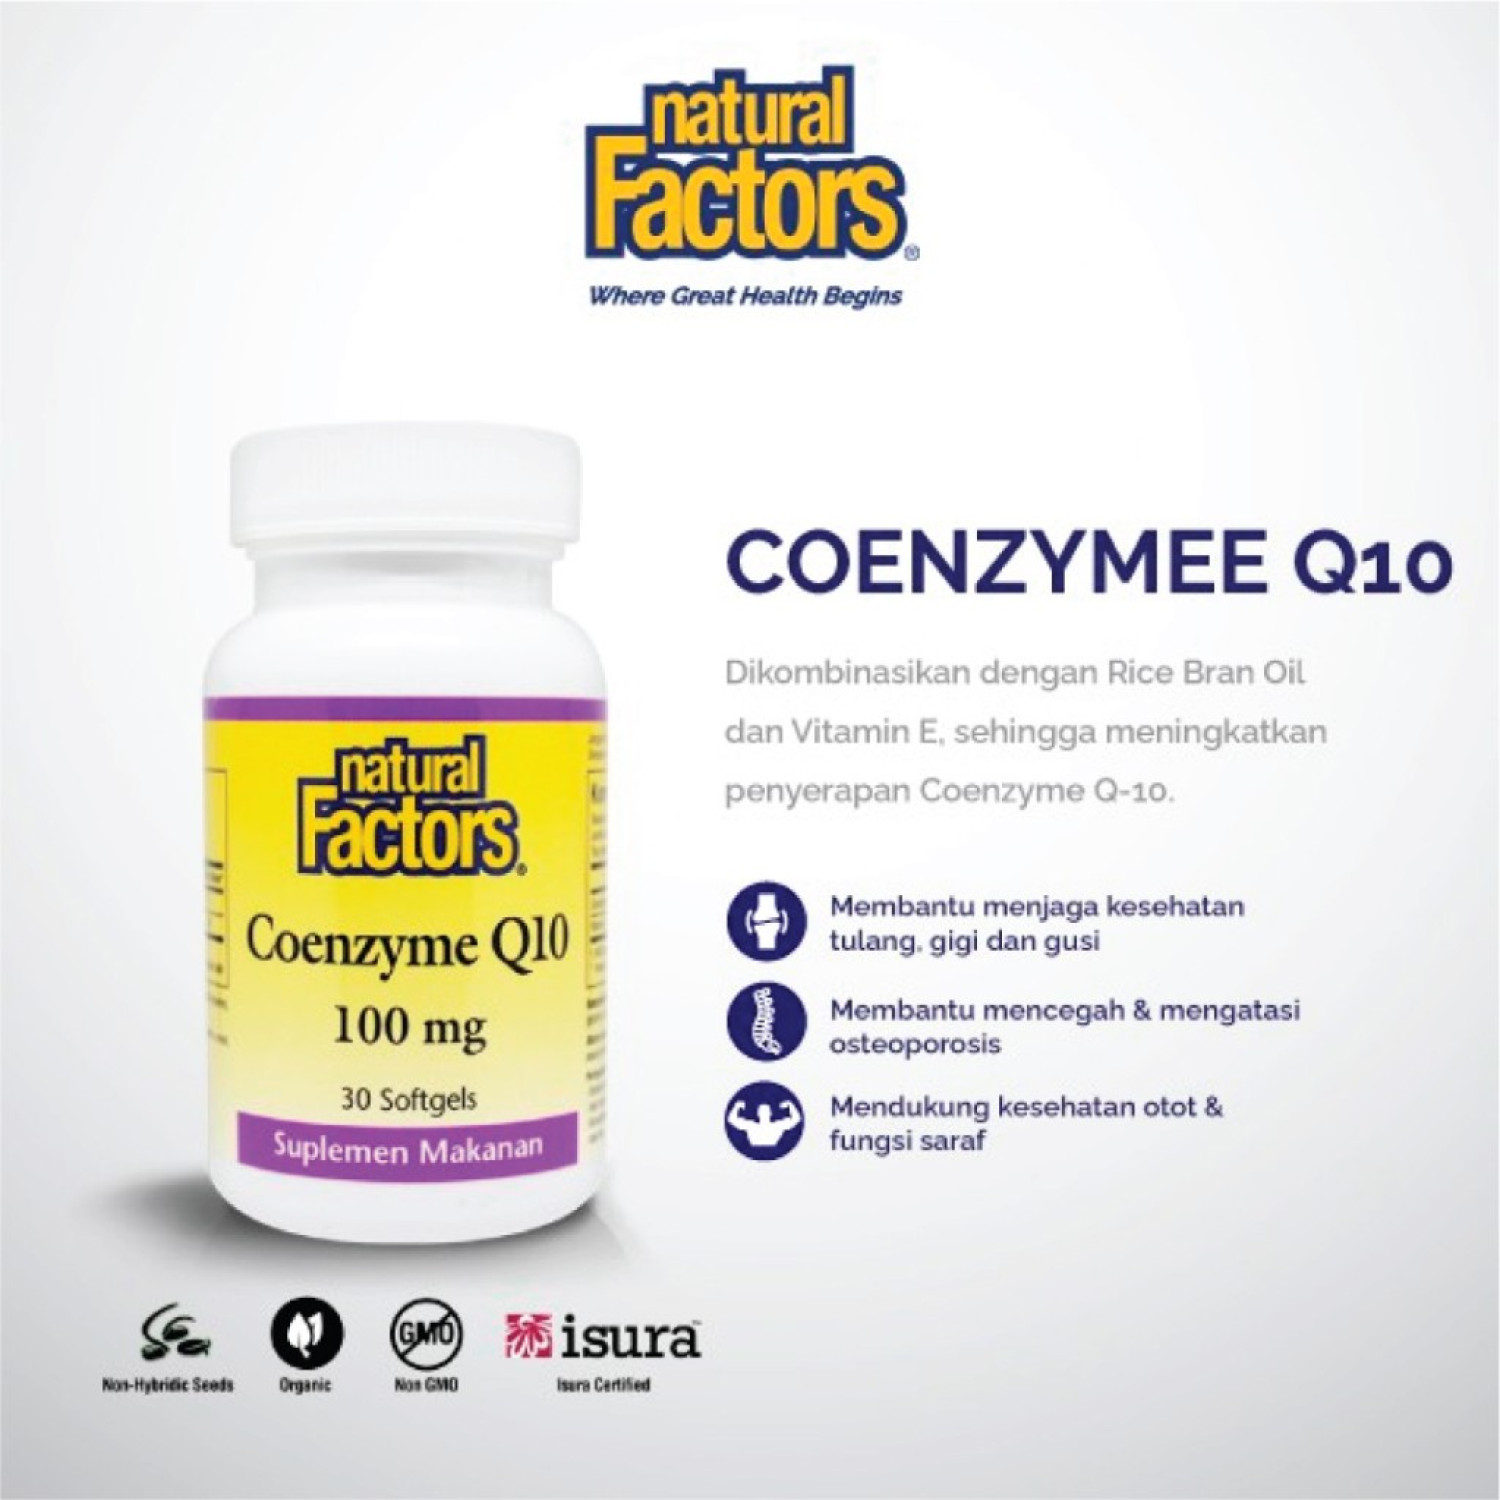 natural-factors-coenzyme-q10-100mg-30-softgels-6542192202ce9.jpeg